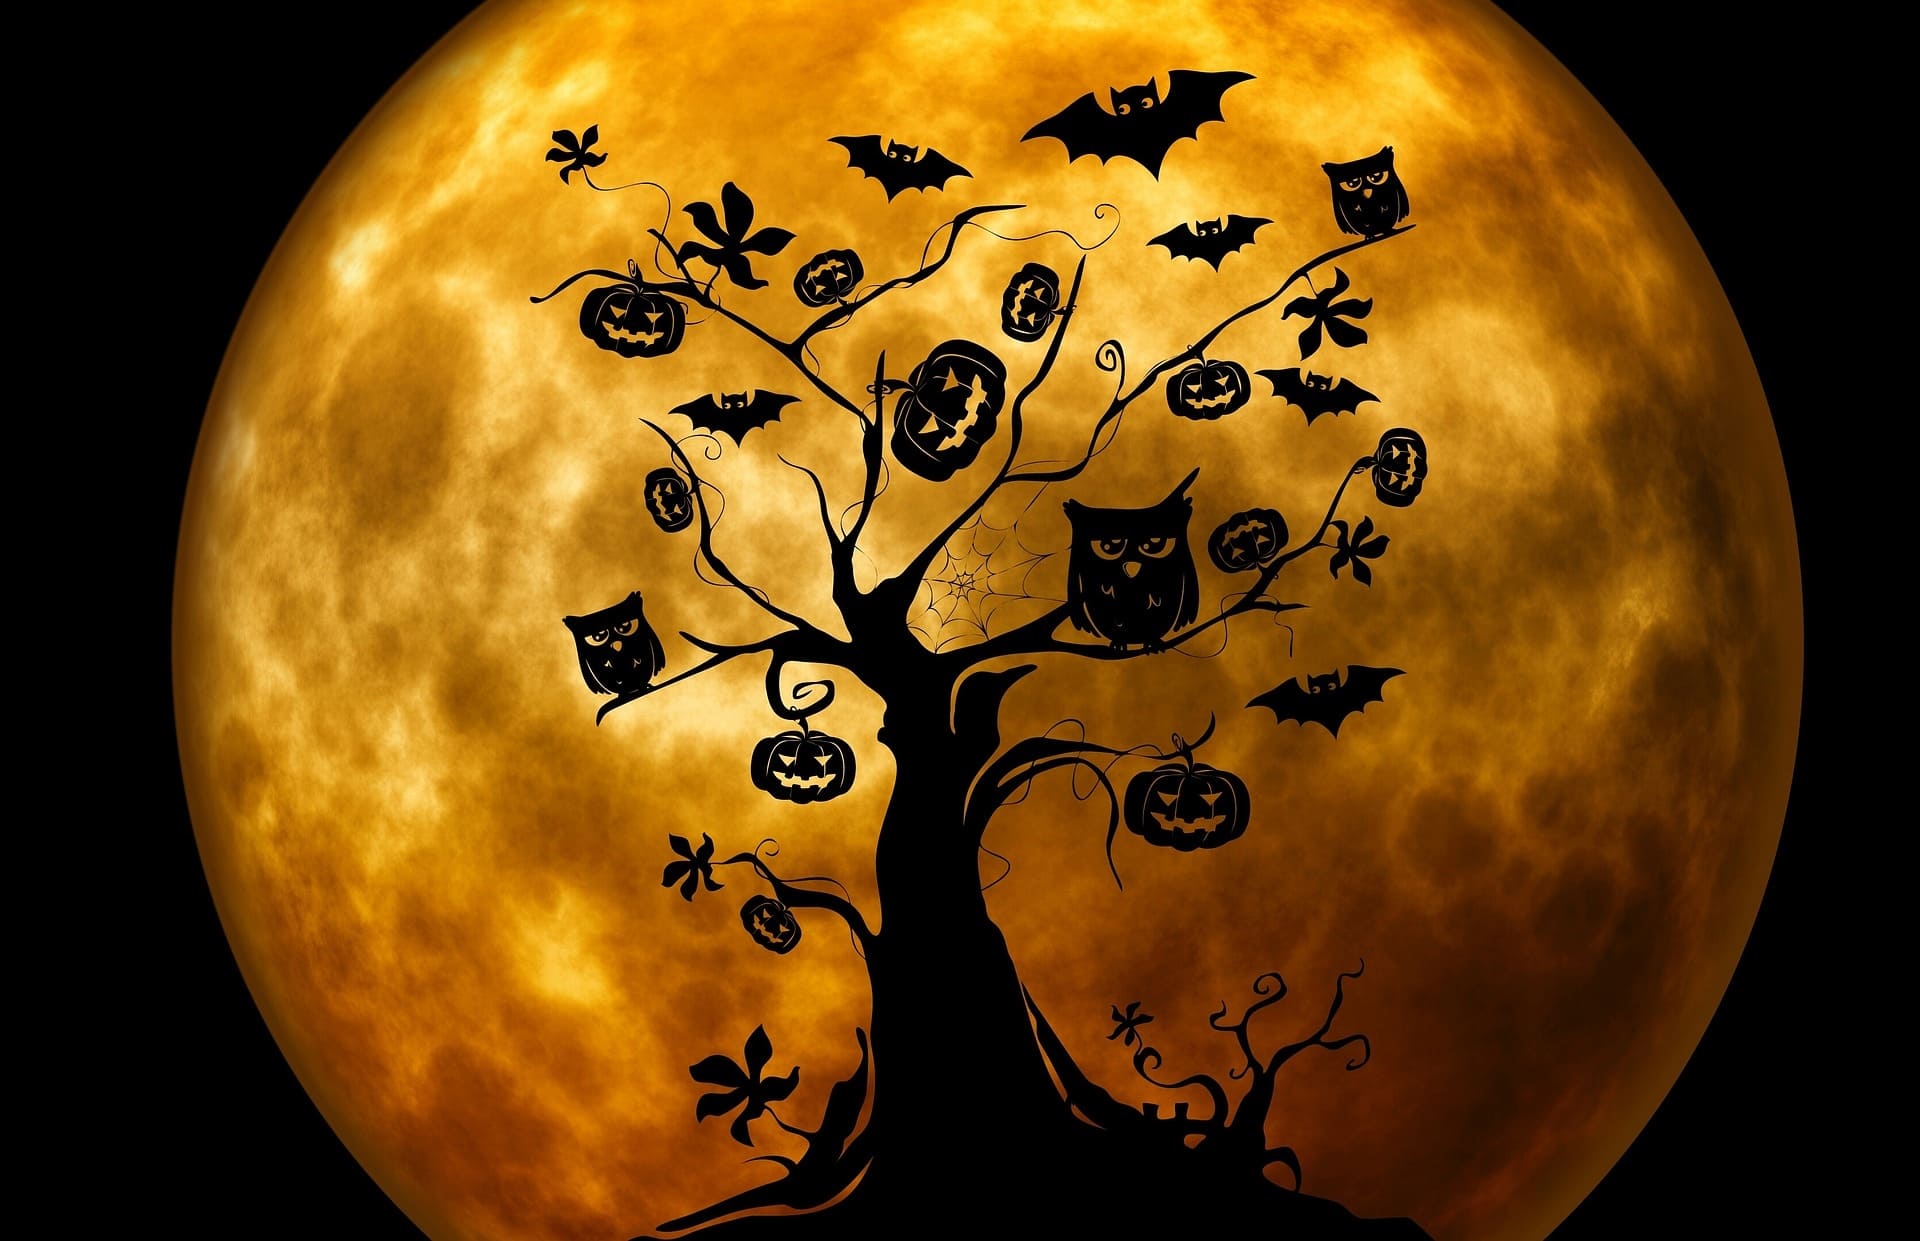 What happens on Halloween around the world?